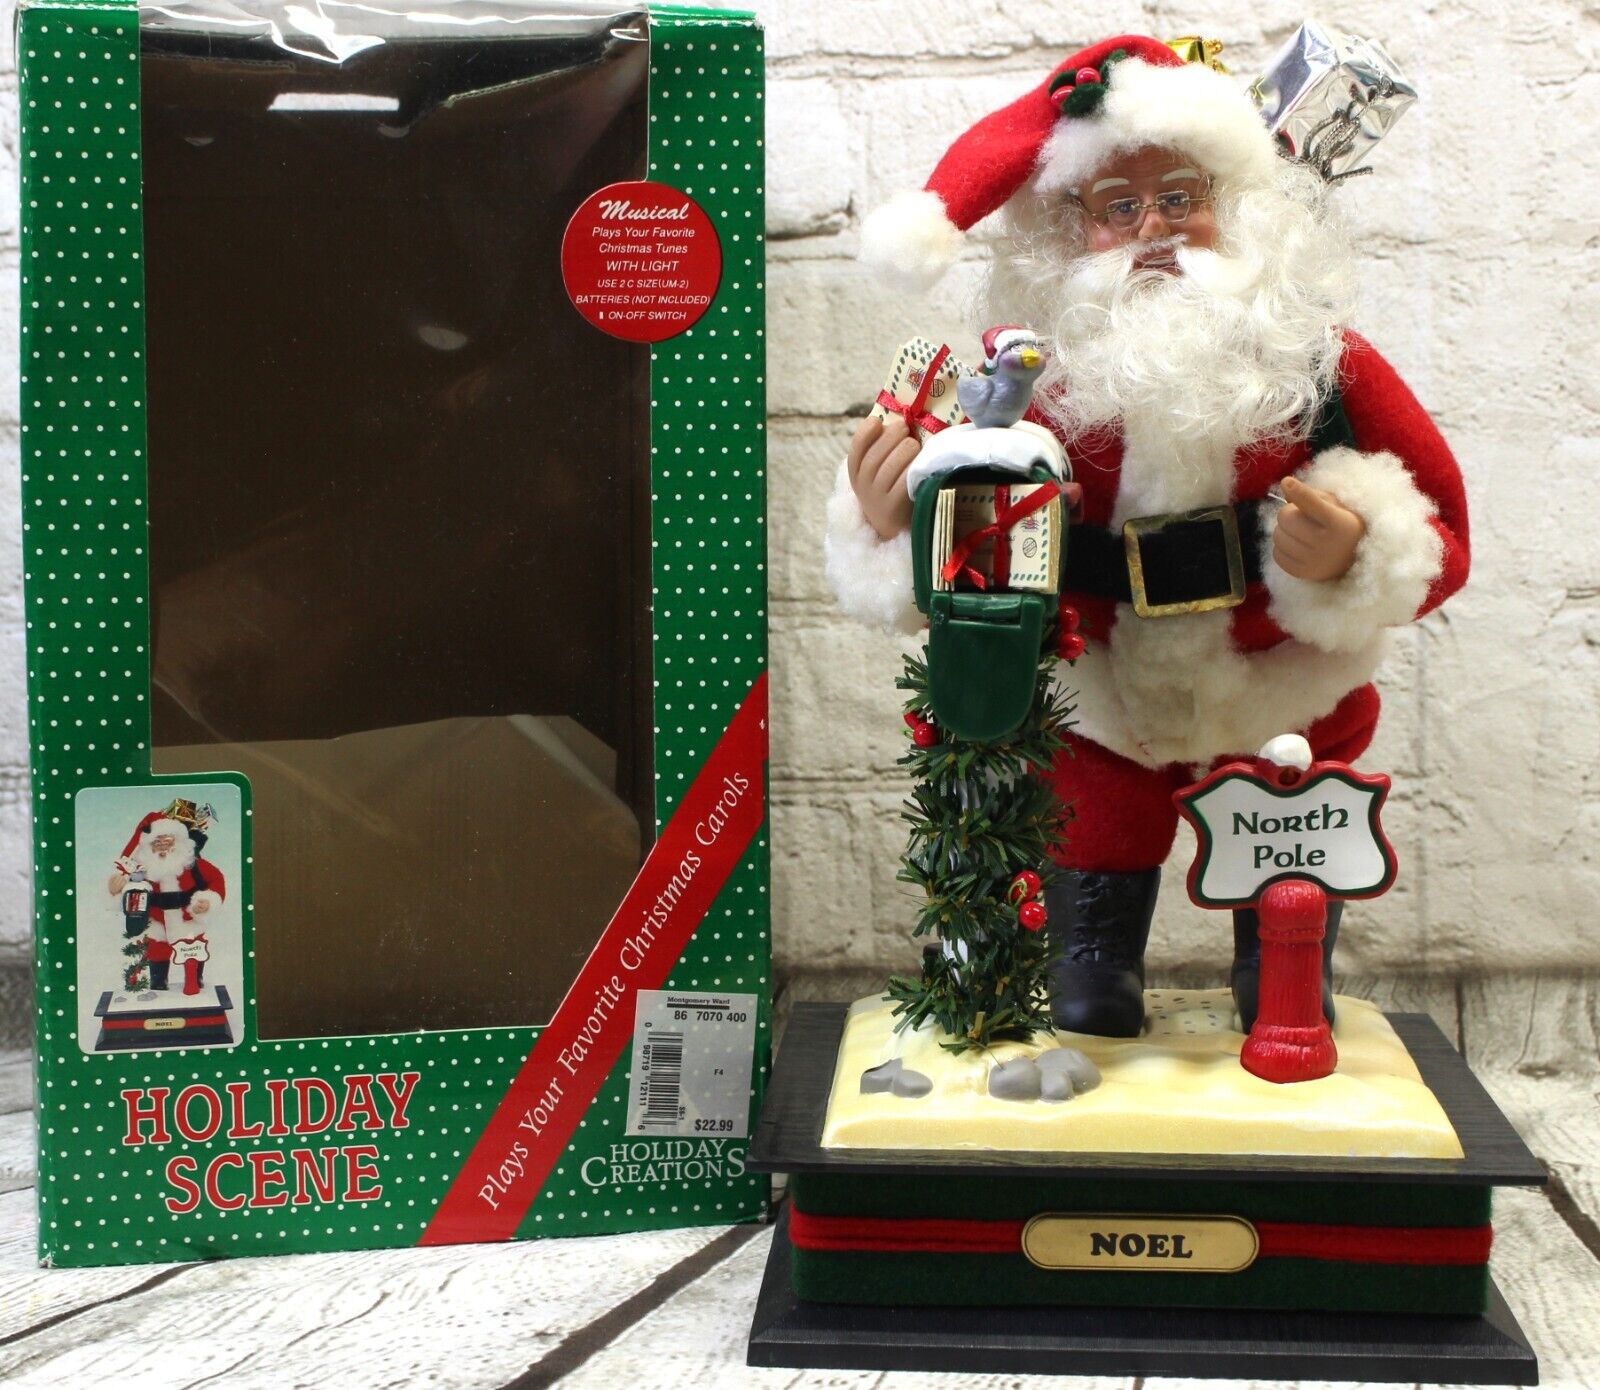 Holiday Creations Santa North Pole Holiday Scene Plays Favorite Christmas Music